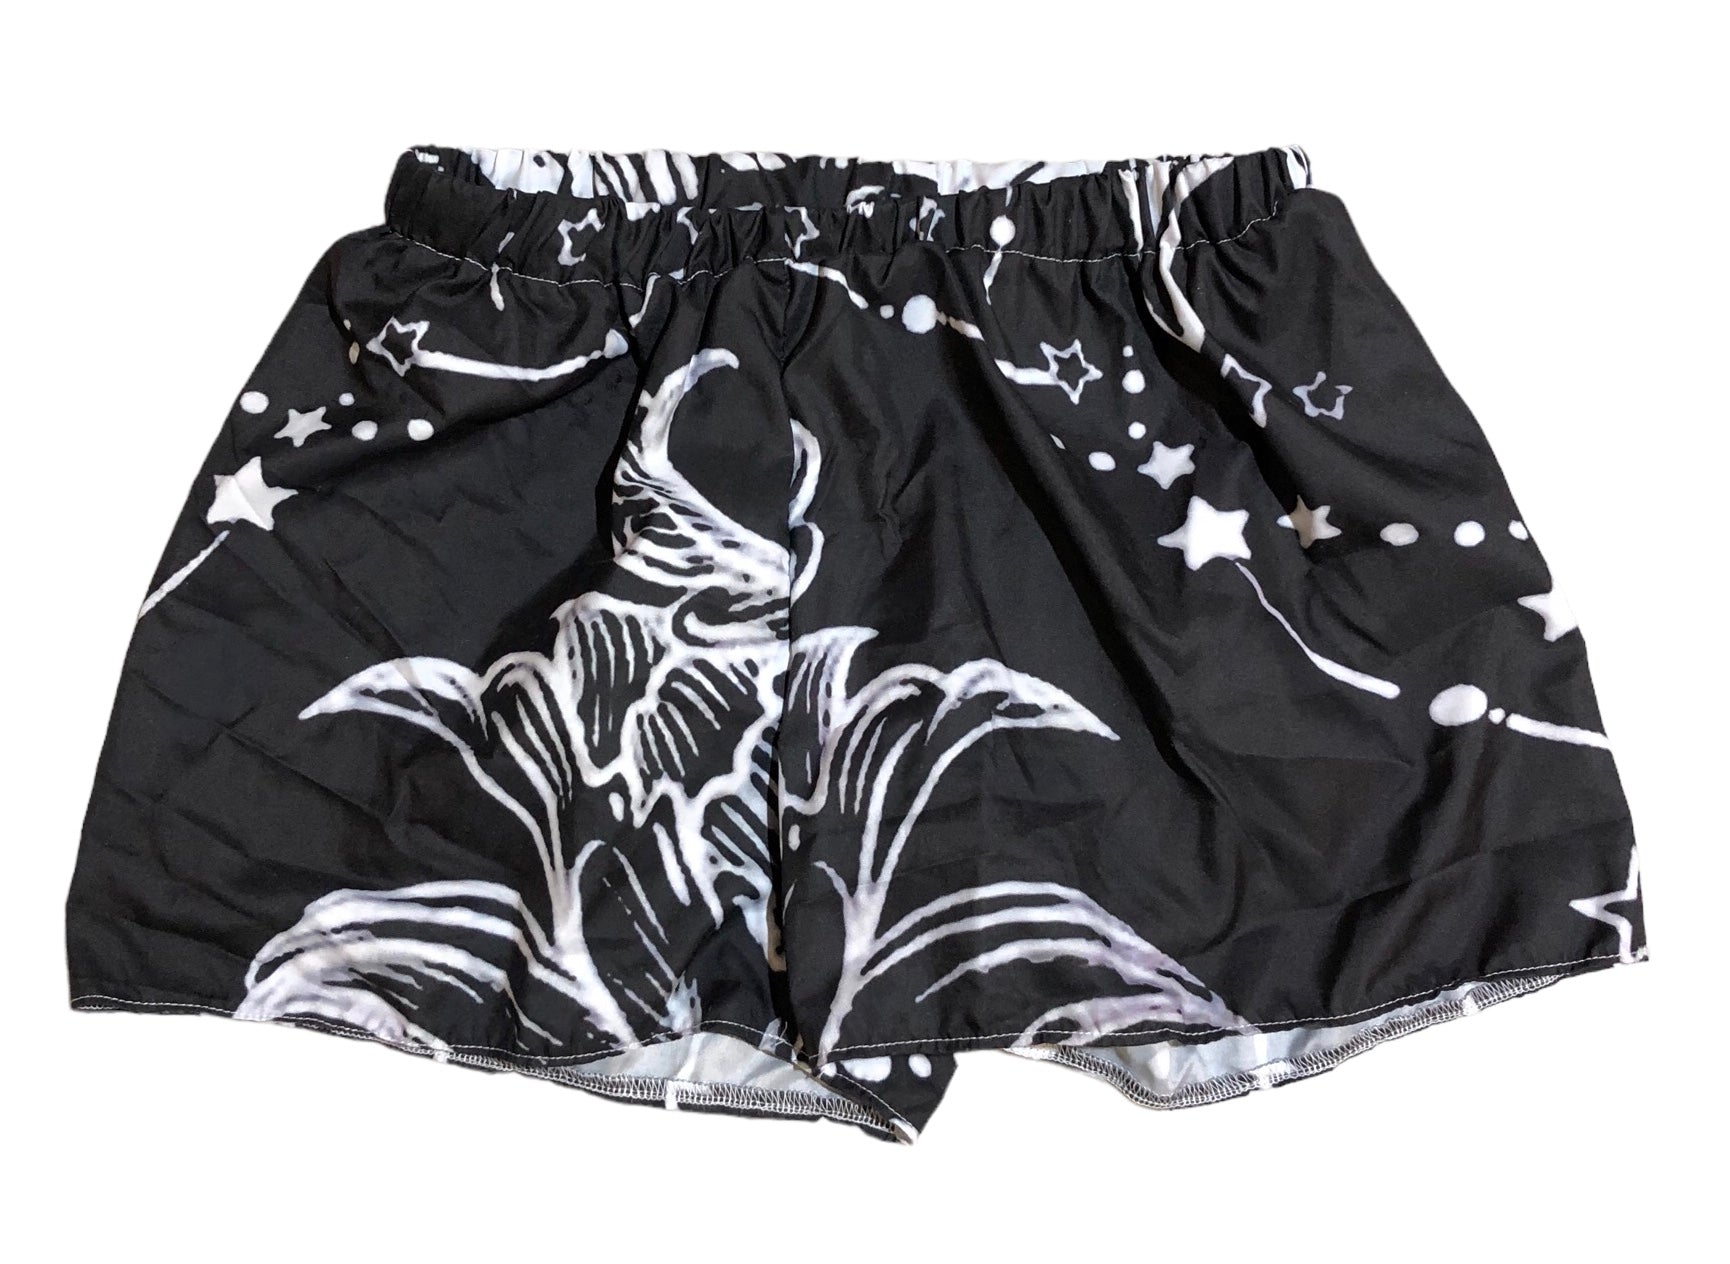 Custom Black and White Shorts by Blim